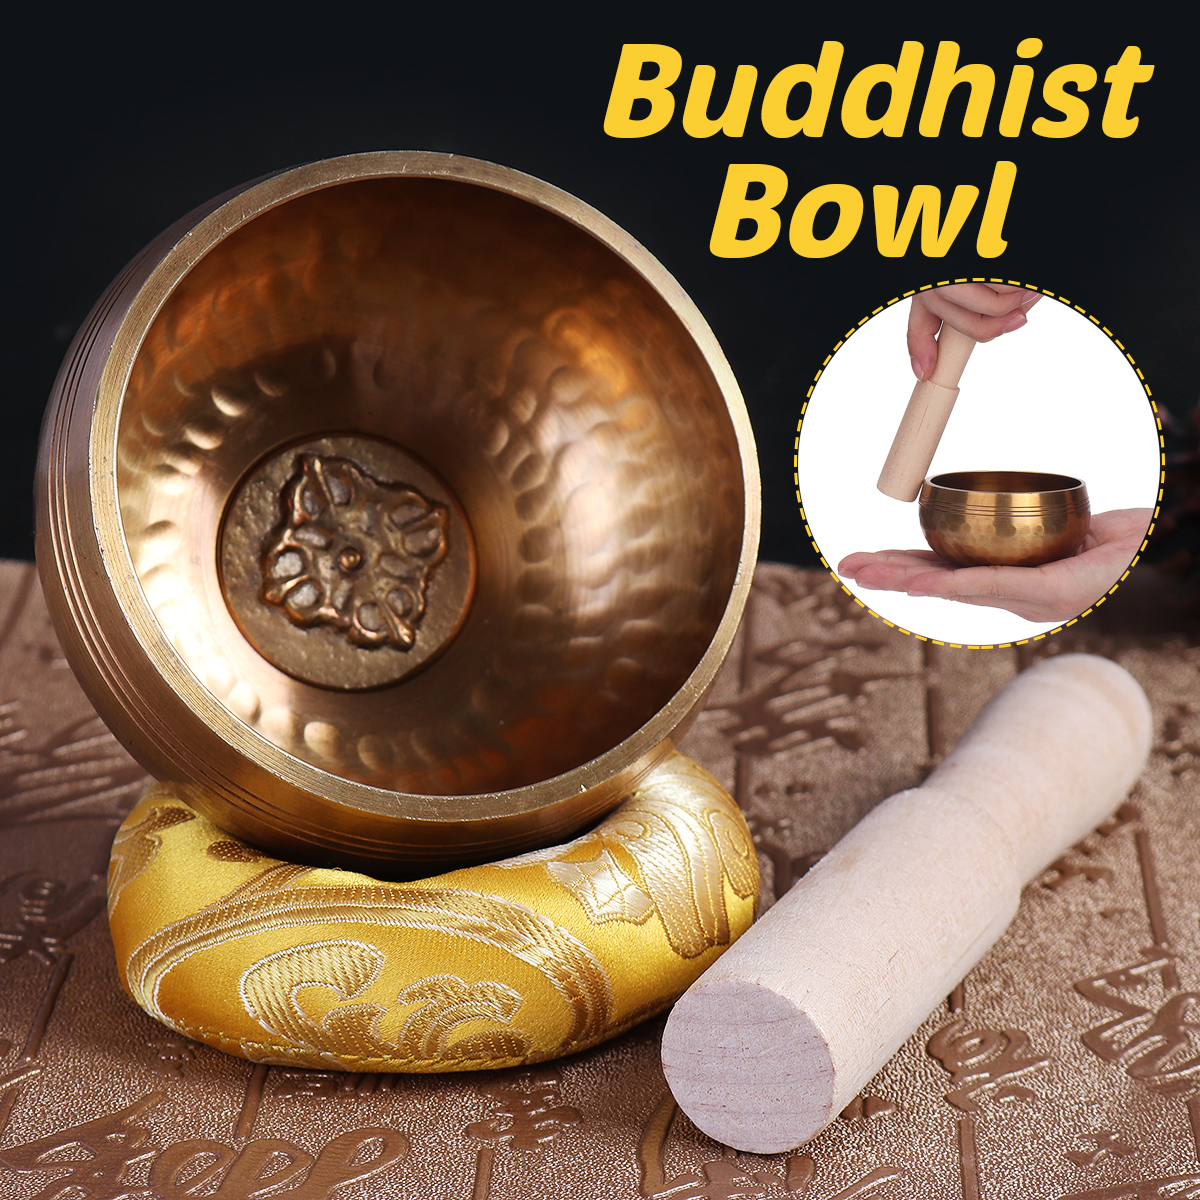 Meditation-Yoga-Singing-Bowl-Buddhist-Chanting-Bowl-Therapy-Mallet-Mat-Cushion-1757847